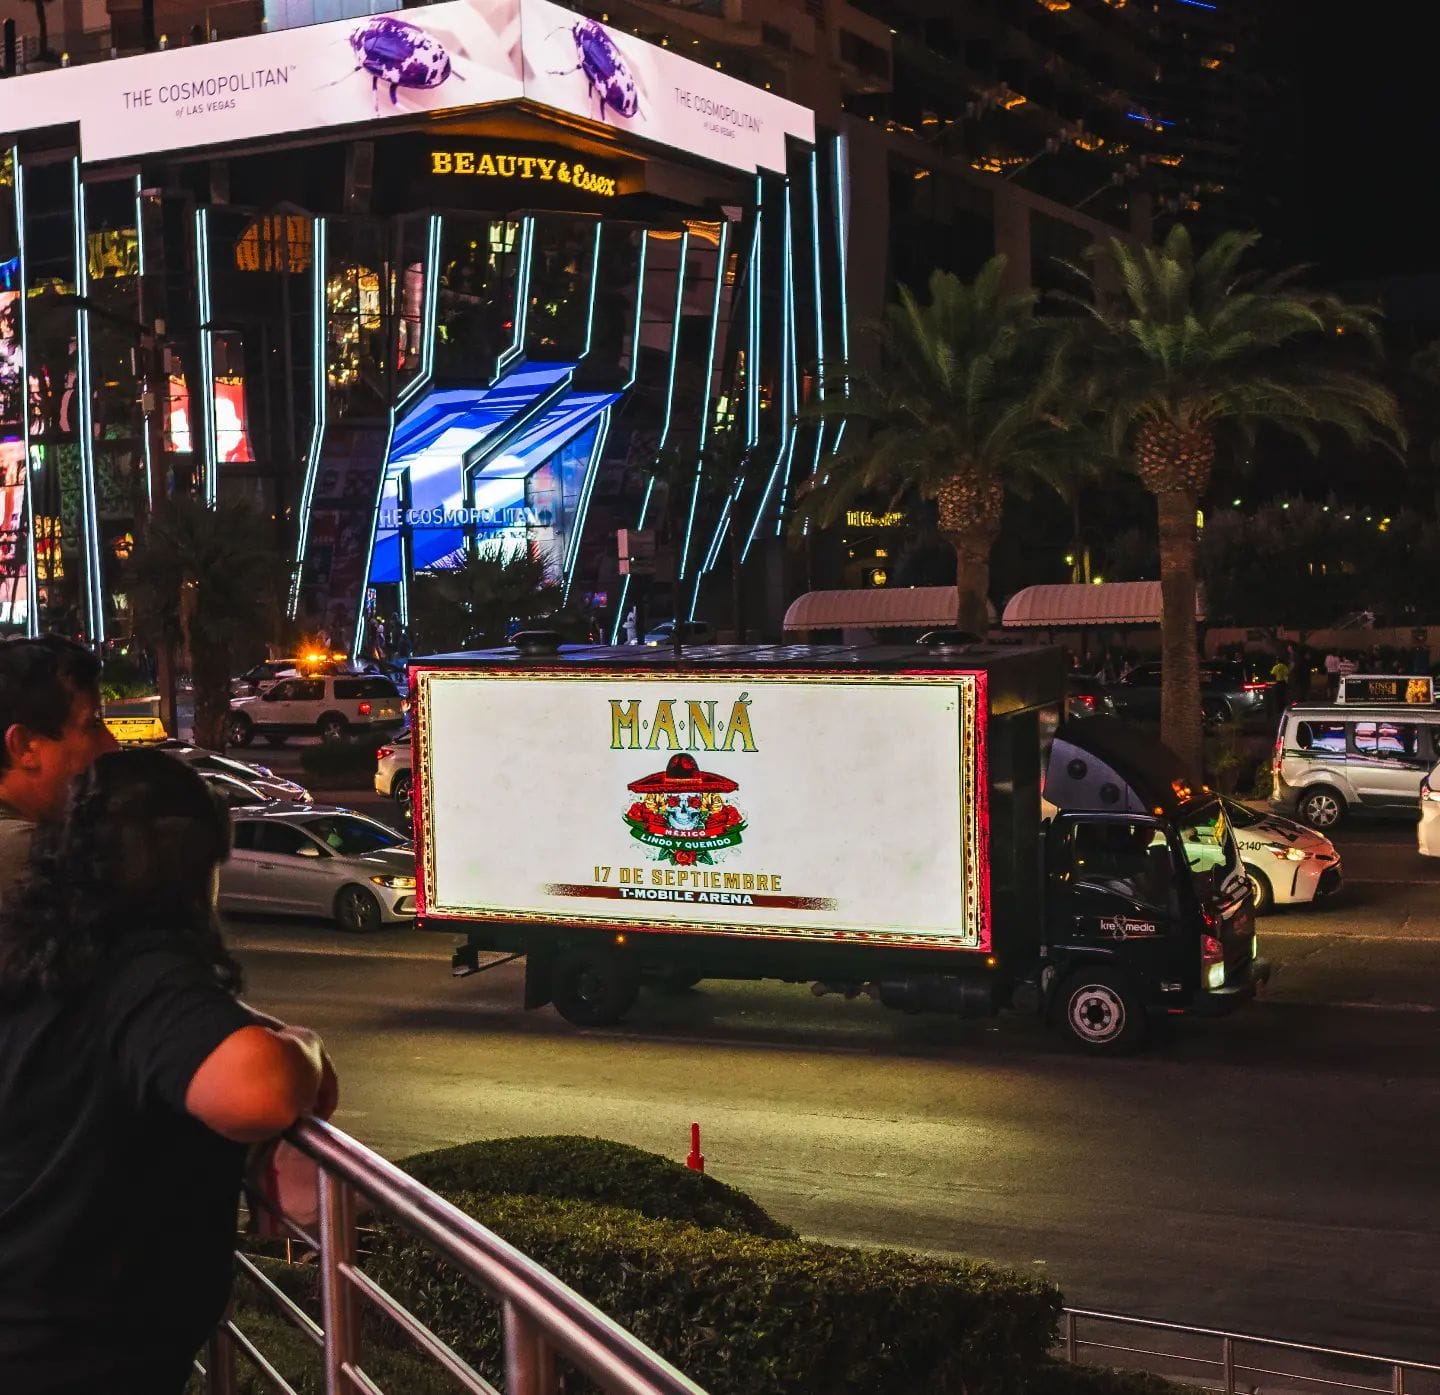 Vegas street view with illuminated advertising truck at night.